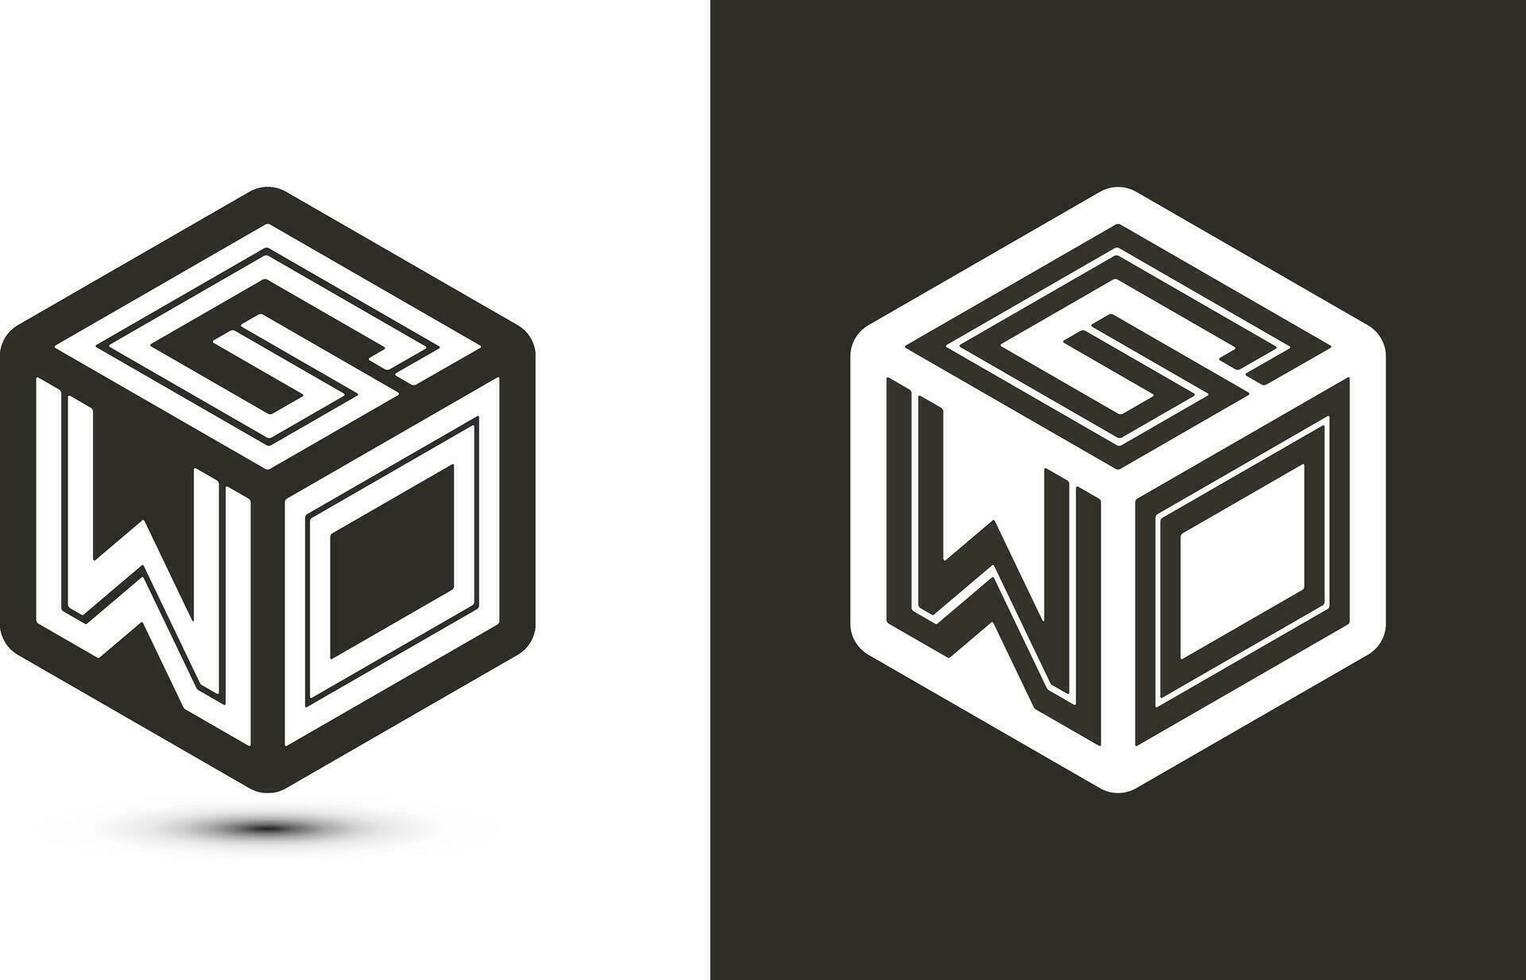 gwo letra logo diseño con ilustrador cubo logo, vector logo moderno alfabeto fuente superposición estilo.